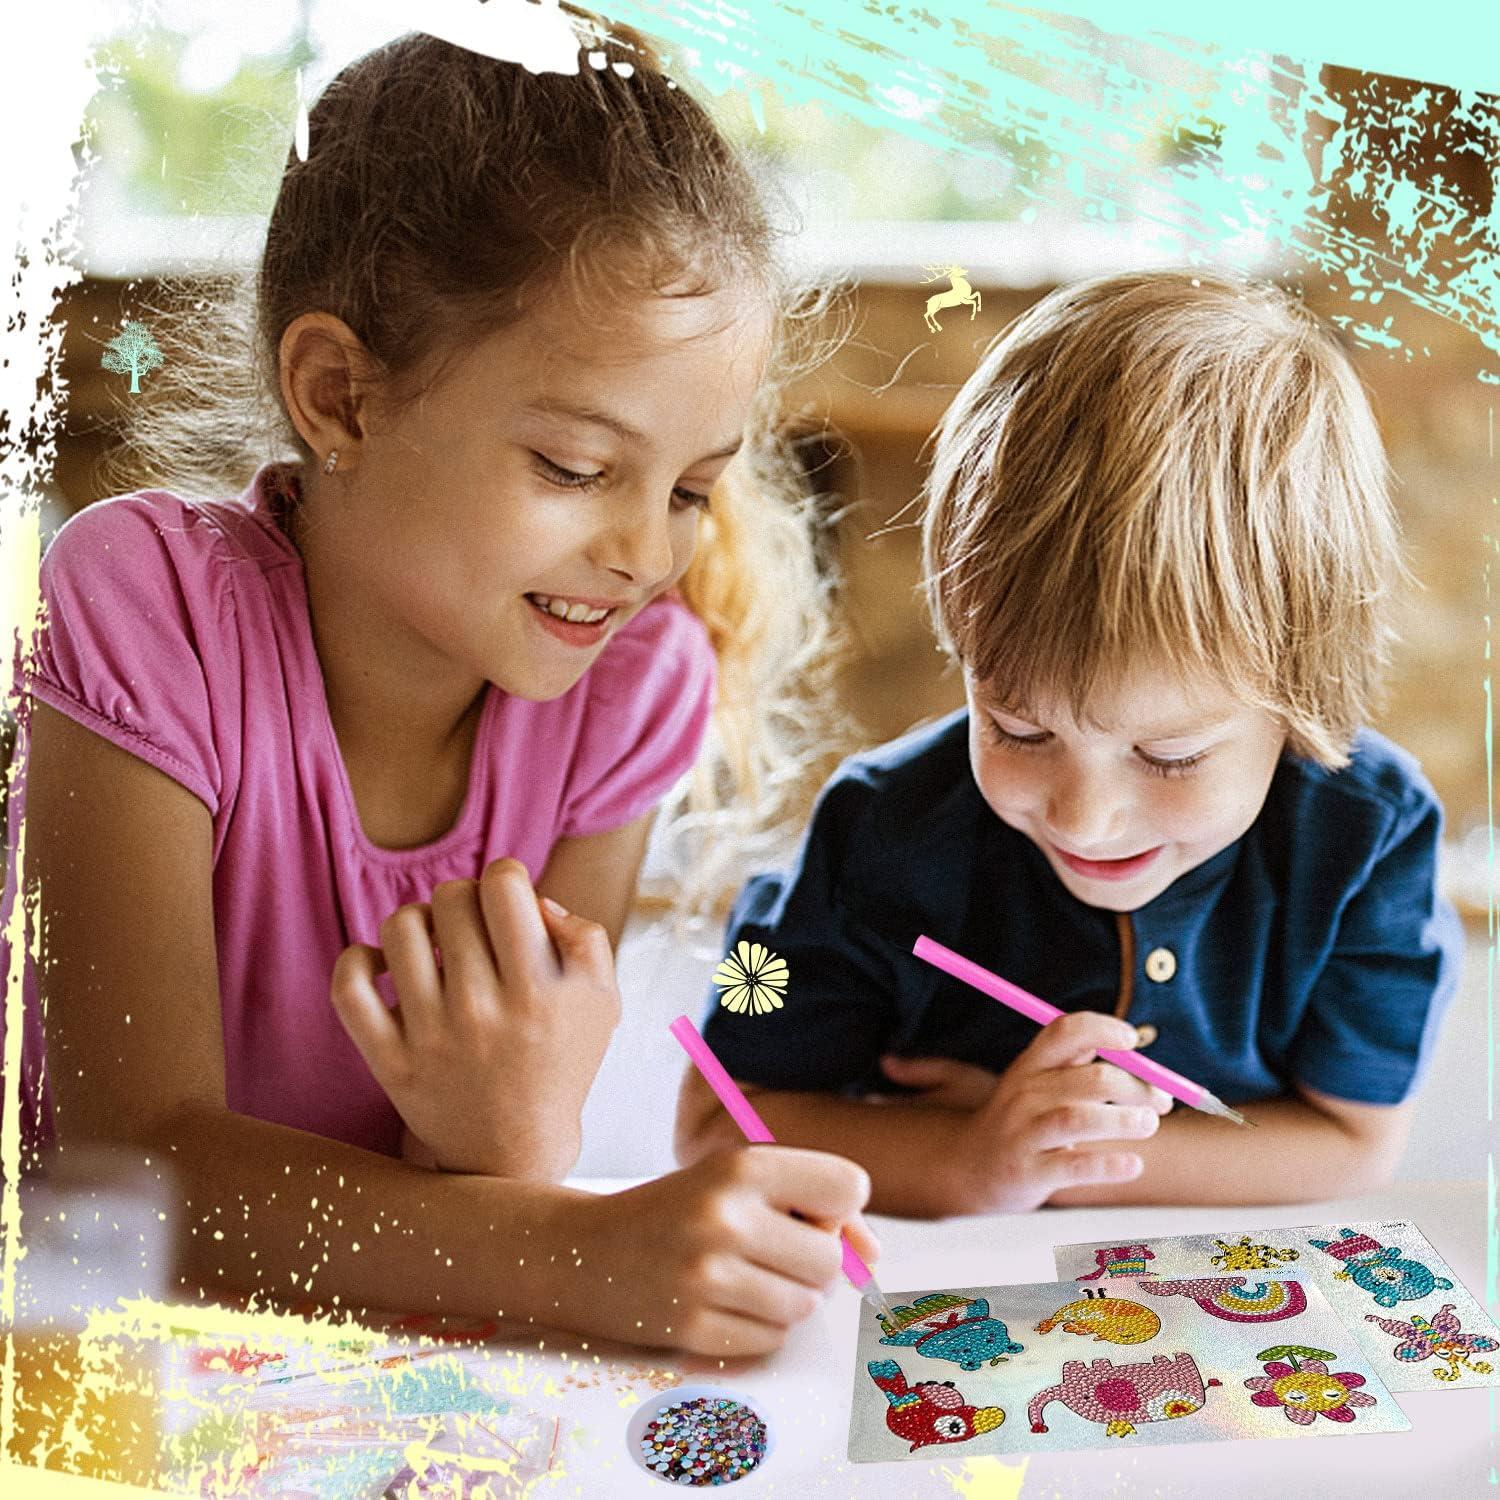 8 Pcs Diamond Painting Coasters with 1 Holder,Mandala Diamond Dotz Art  Coasters Kits for Beginners,Adults and Kids Small Diamond Painting Kit Art  Craft Supplies 